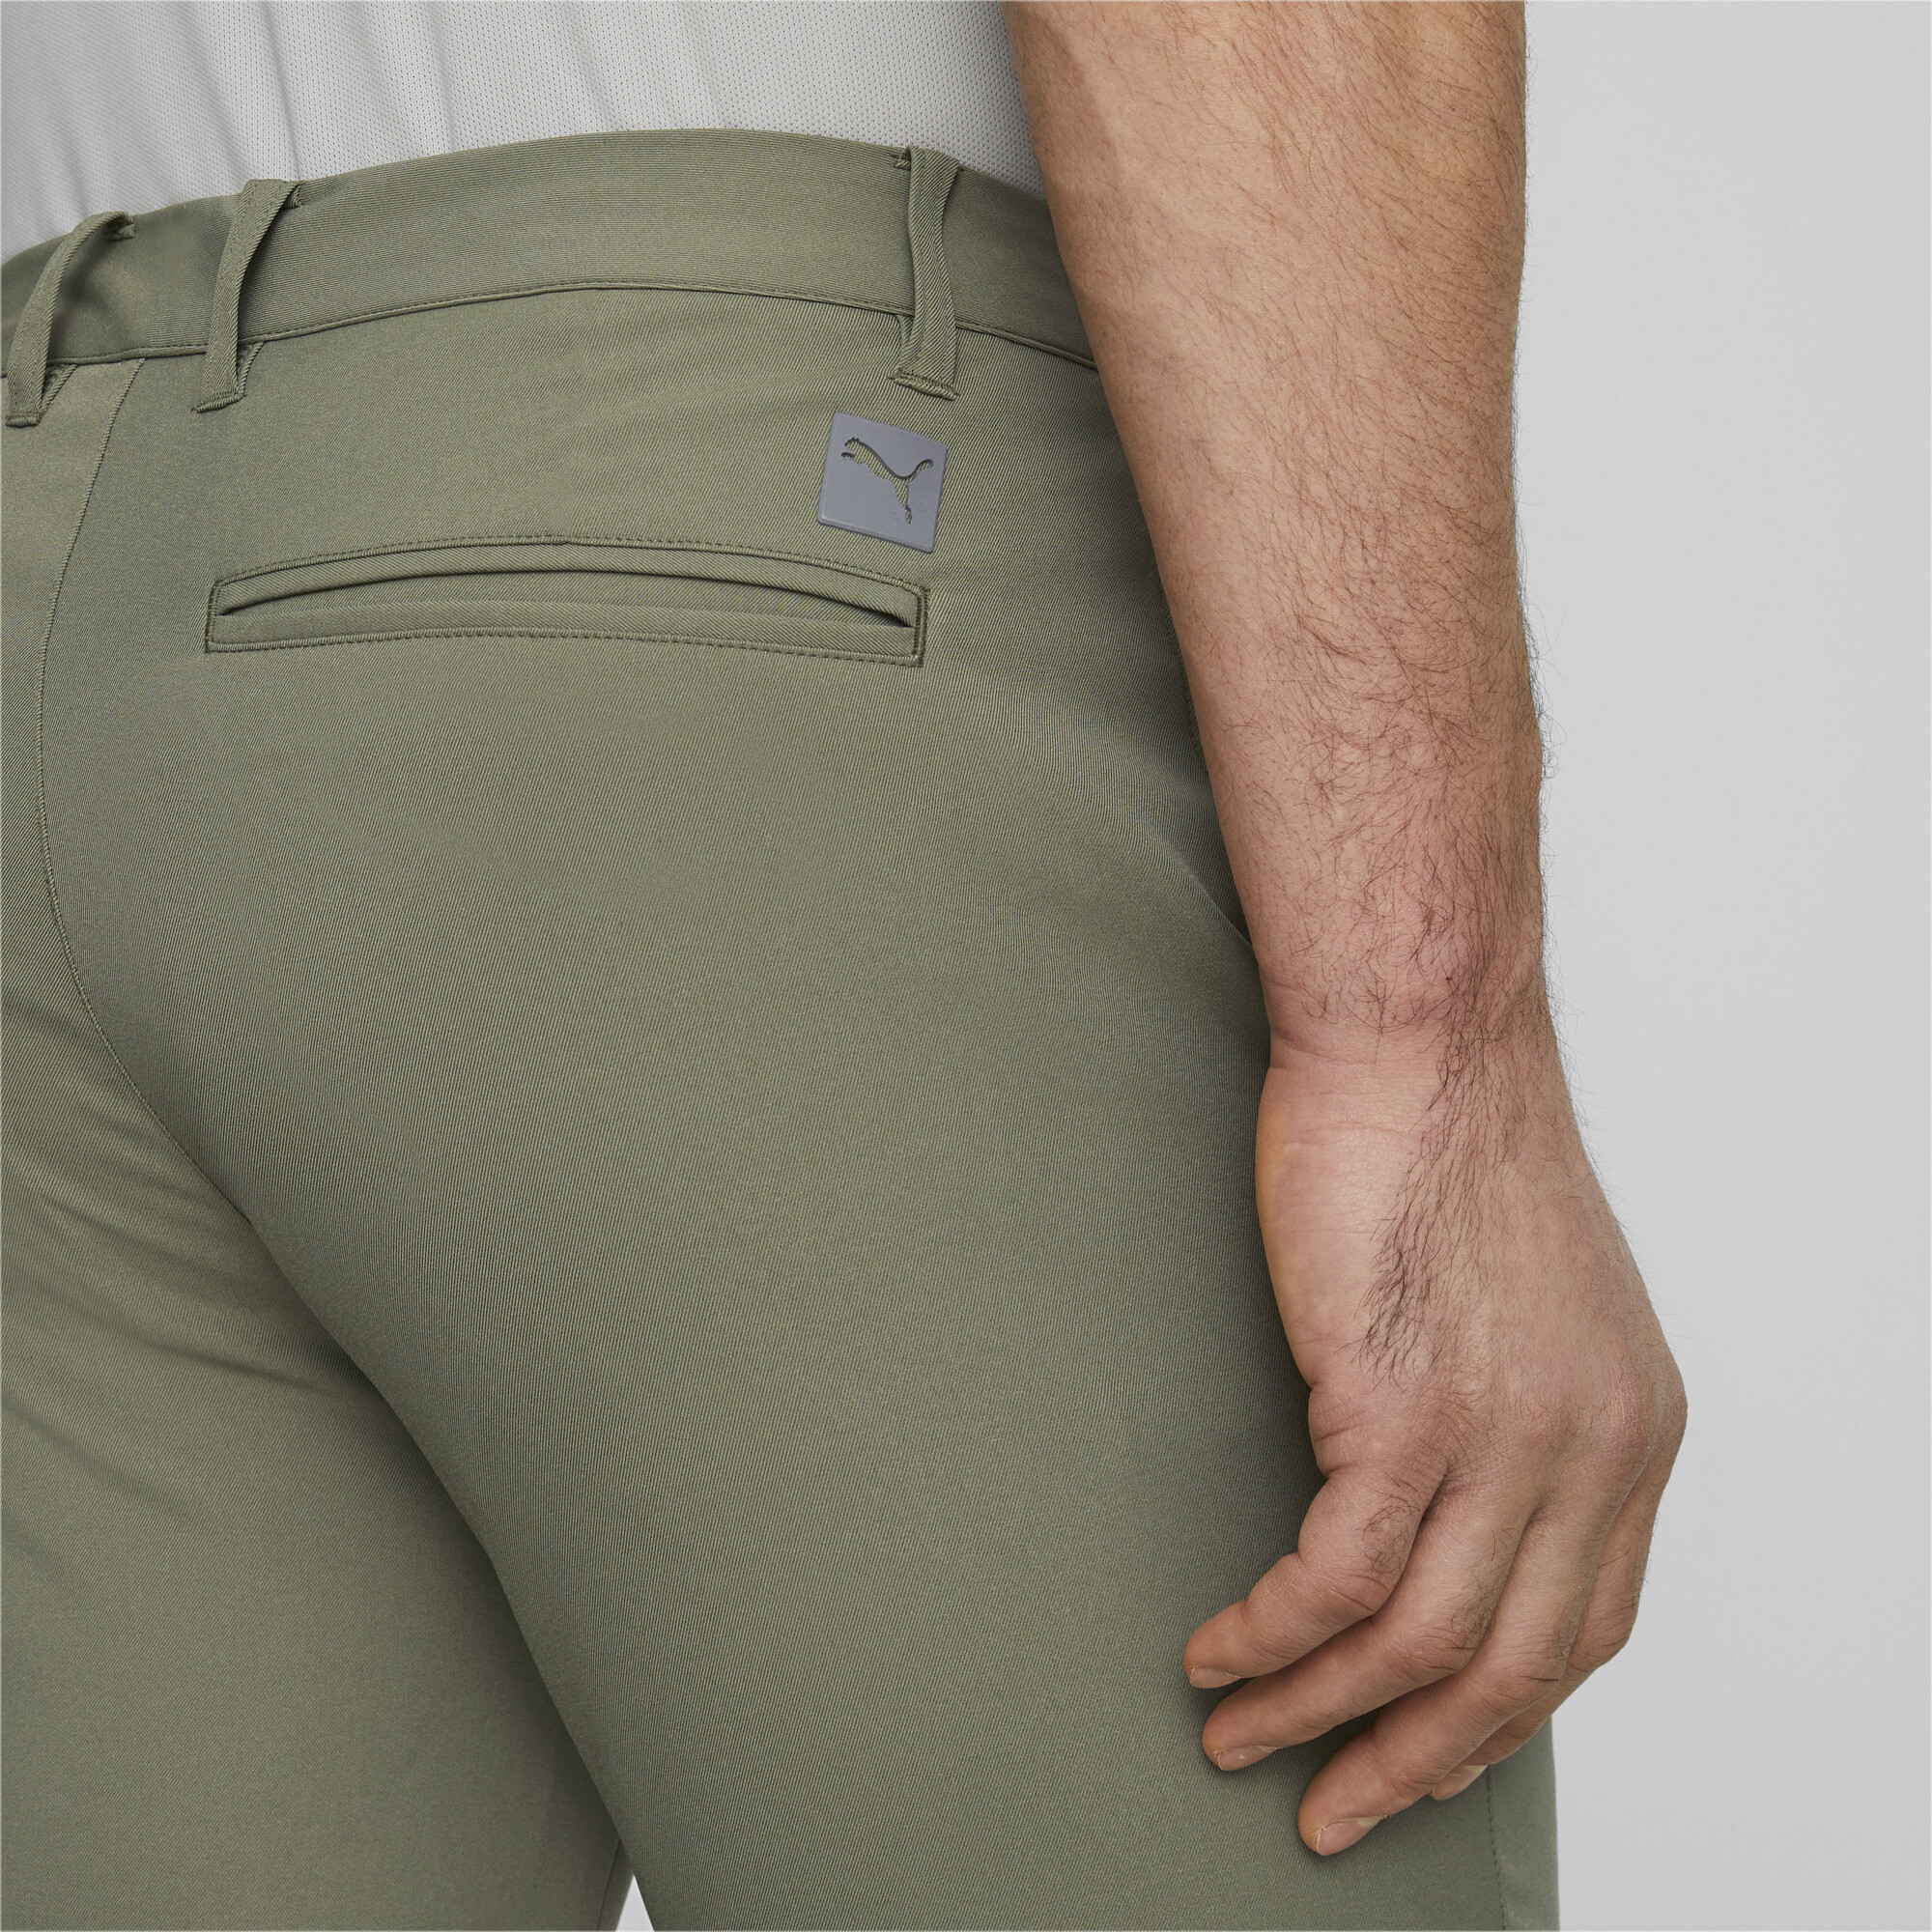 Men's Puma Dealer Tailored Golf Pants, Green, Size 38/36, Clothing